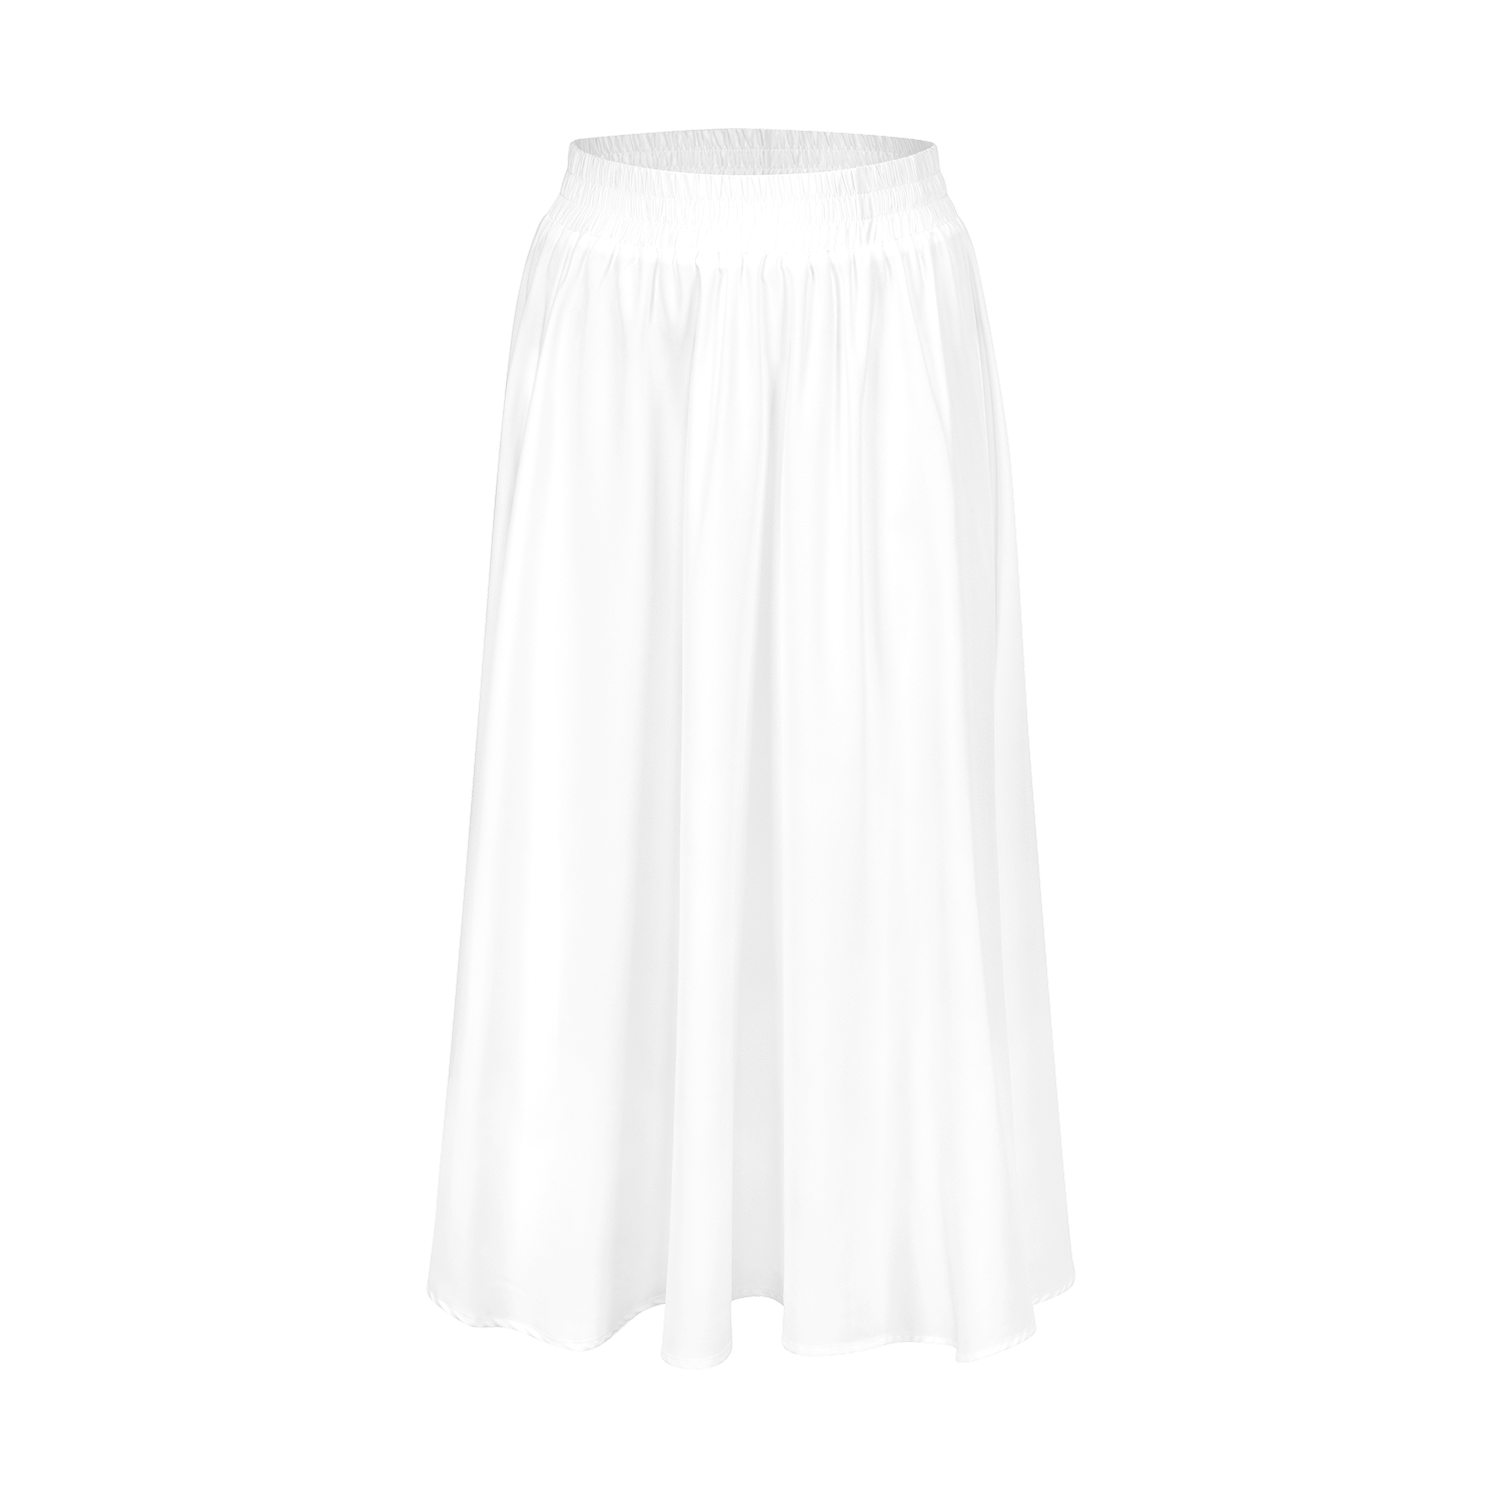 Print On Demand All-Over Print Women's Flared Midi Skirt-2